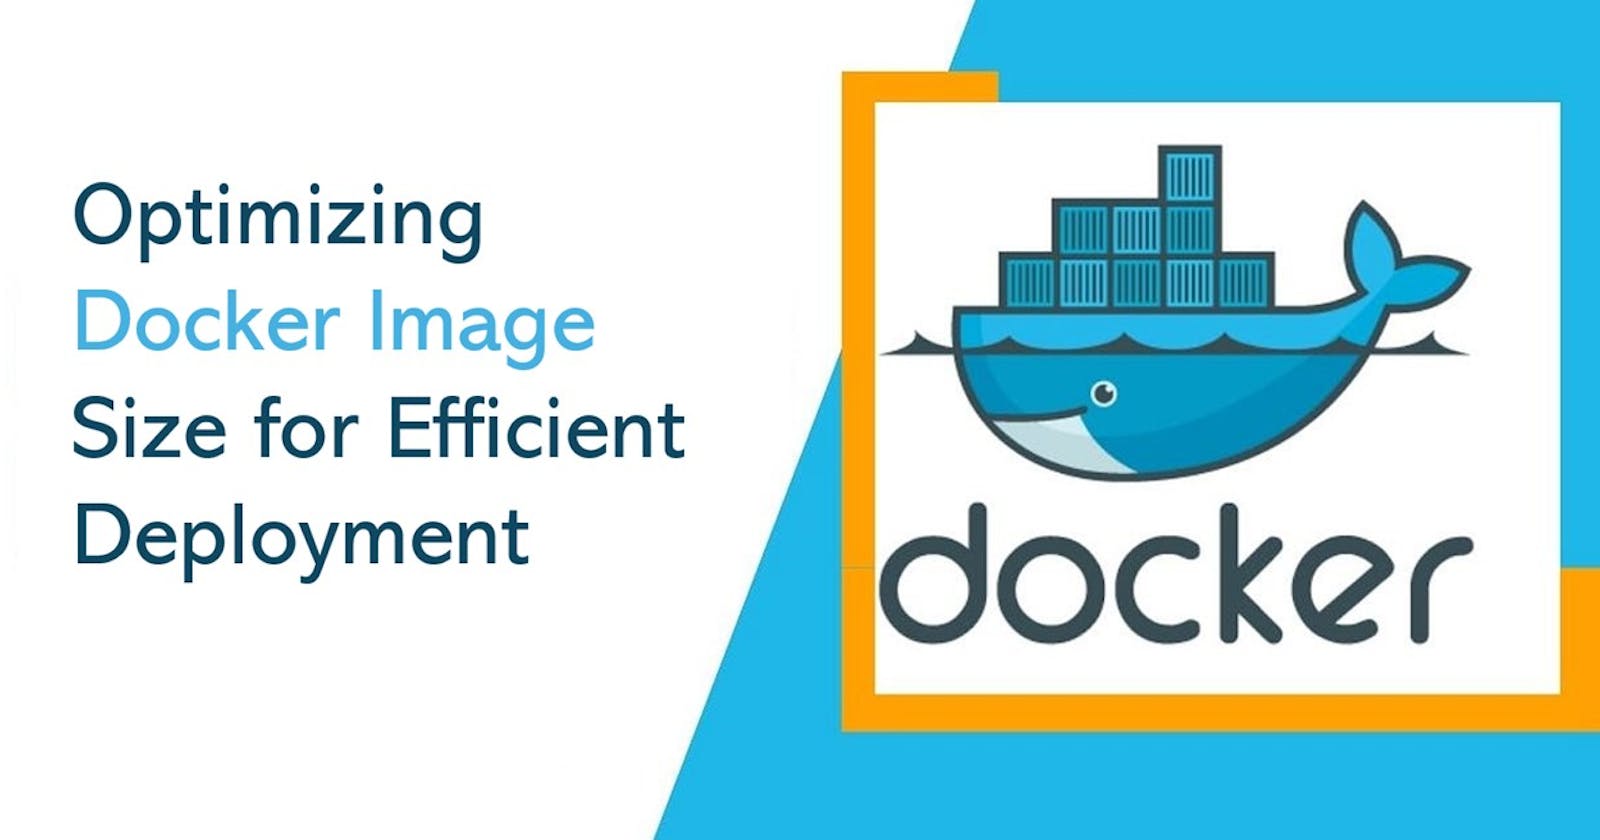 Optimizing Docker Image Size for Efficient Deployment